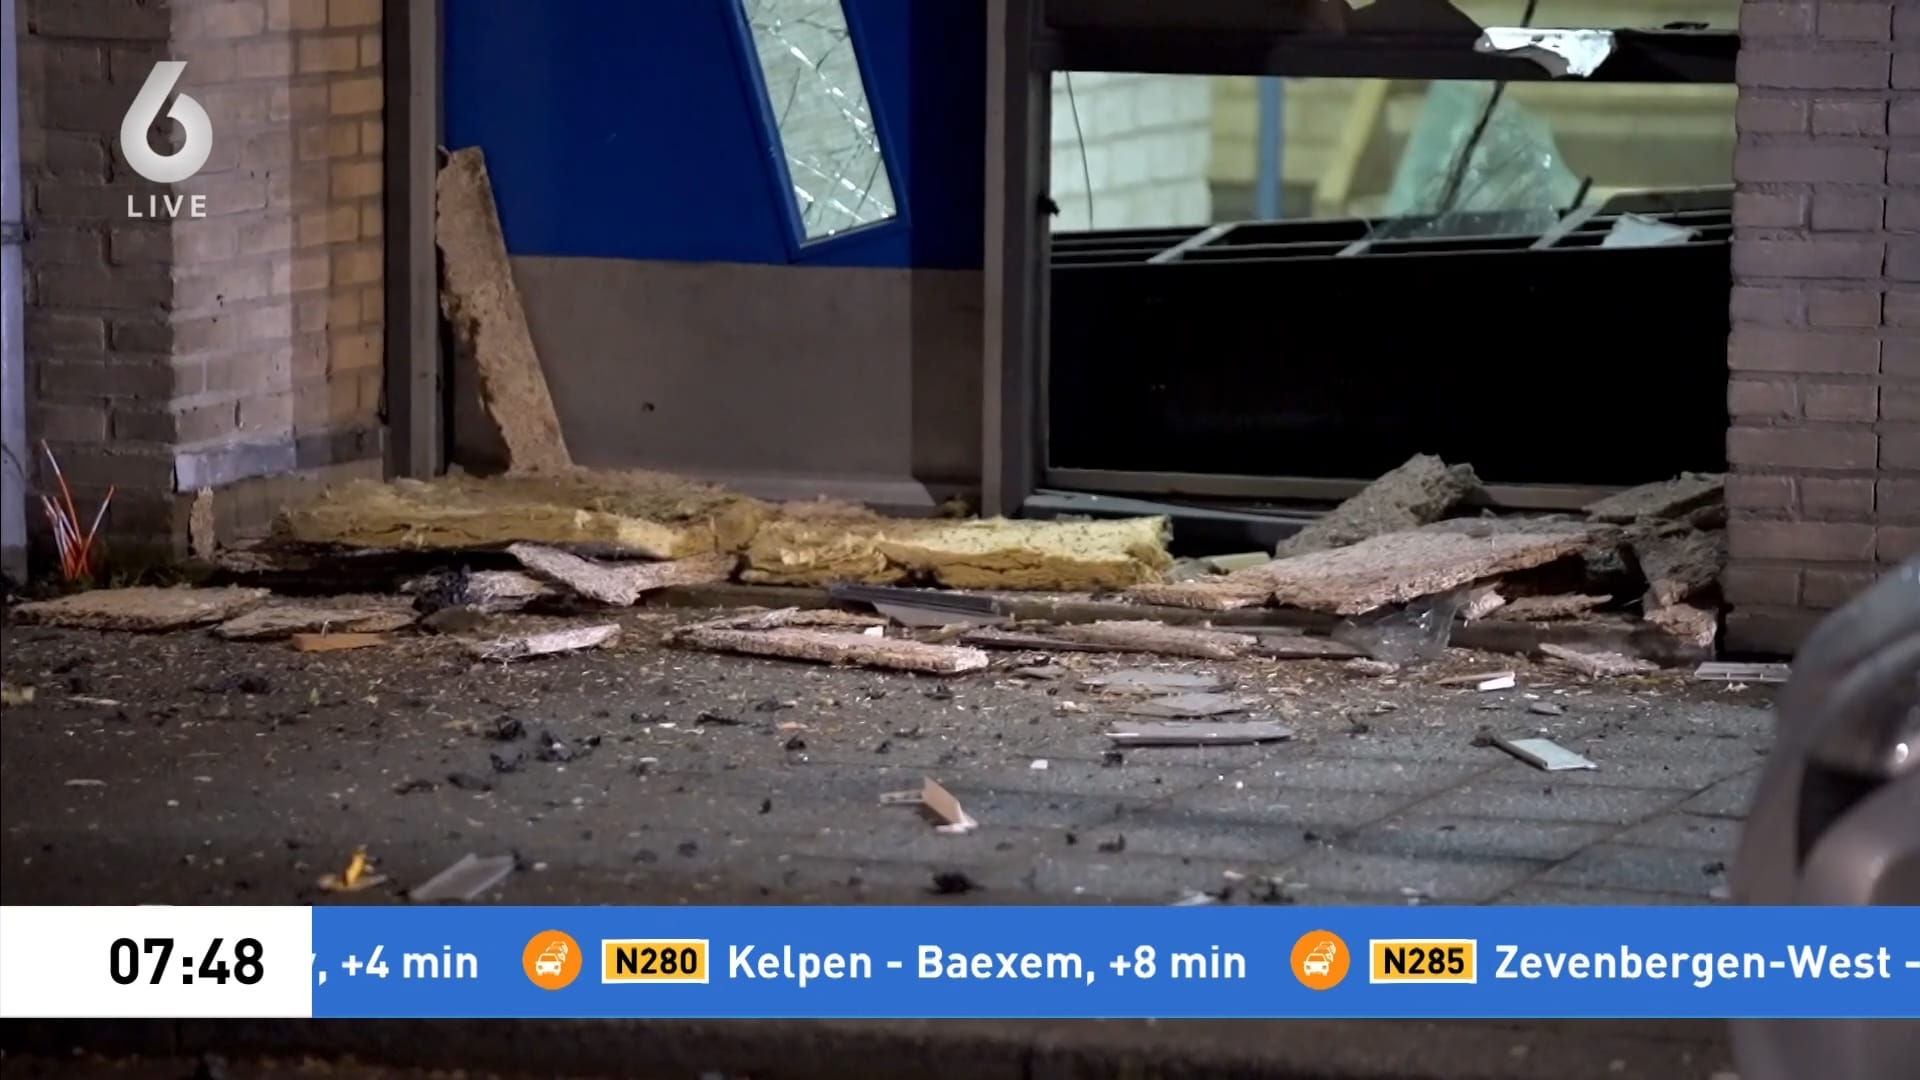 'Cokeroof achter reeks explosies in Rotterdam'